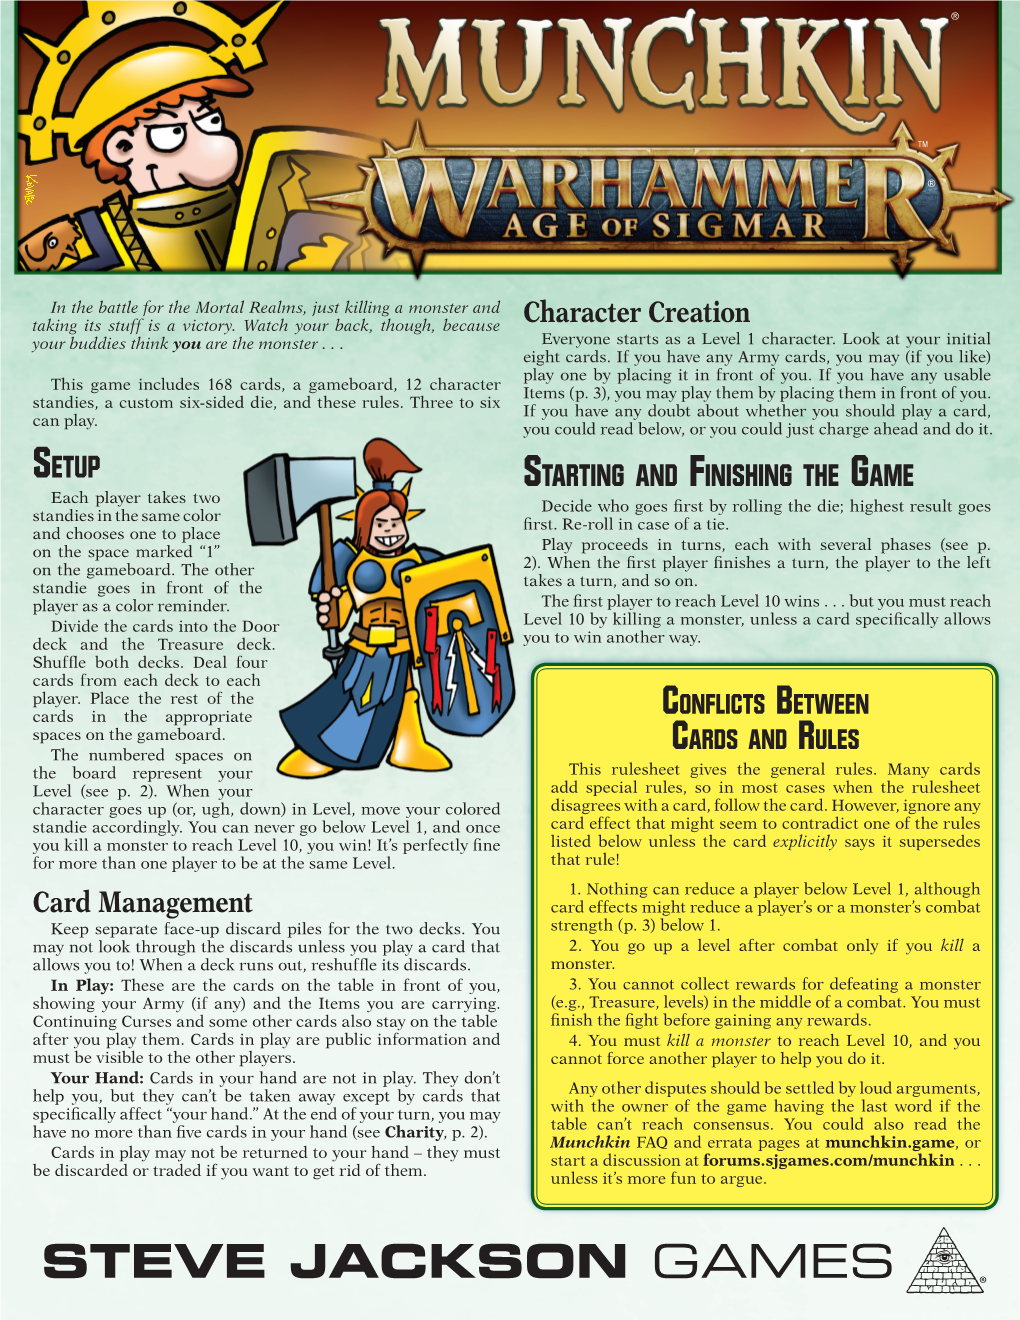 Munchkin Warhammer Age of Sigmar Rules